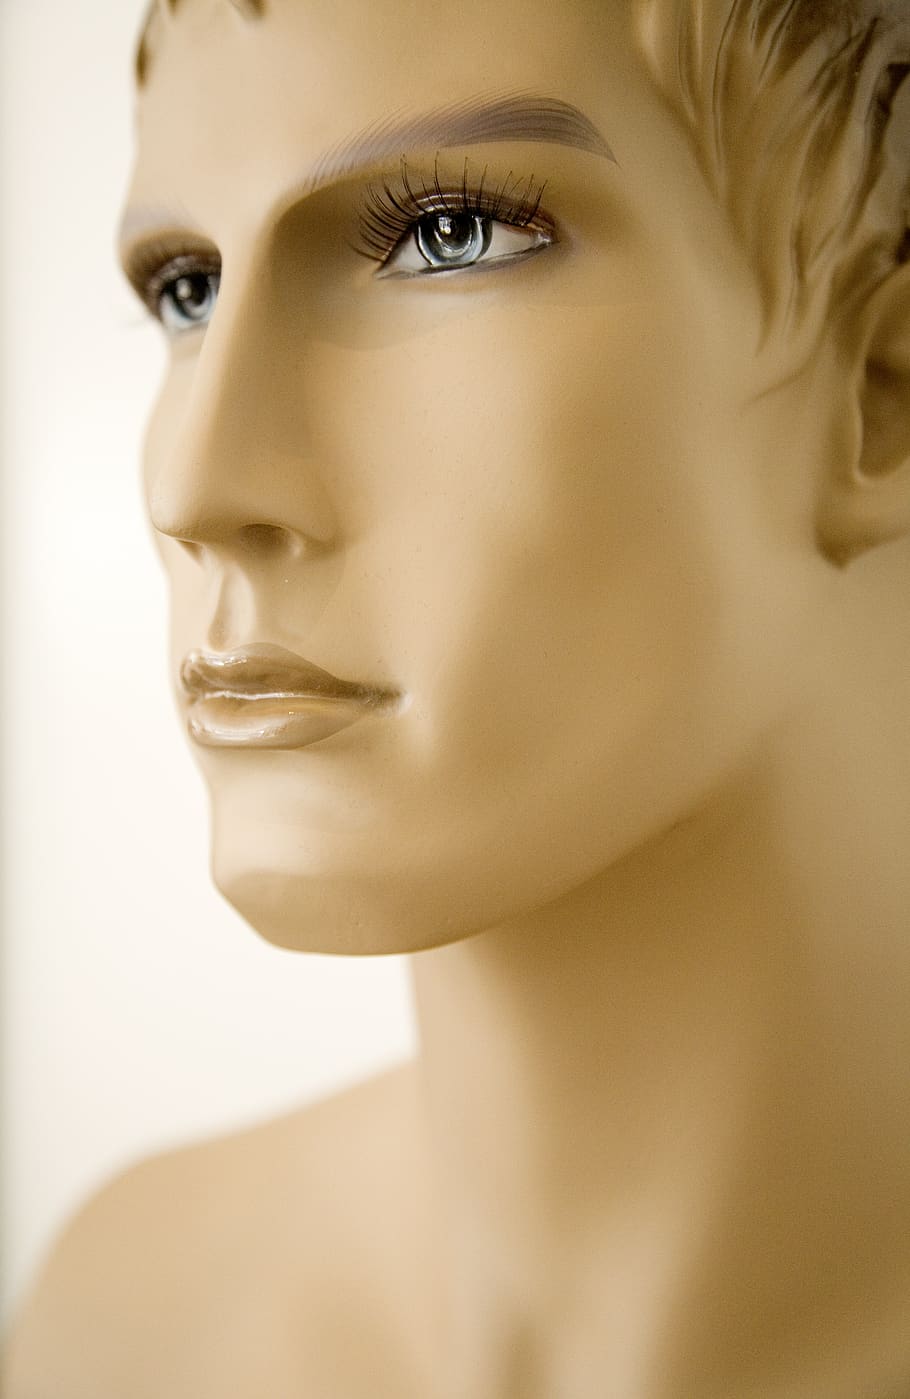 Male Manikin, mannequin, person, human body part, close-up, headshot, HD wallpaper